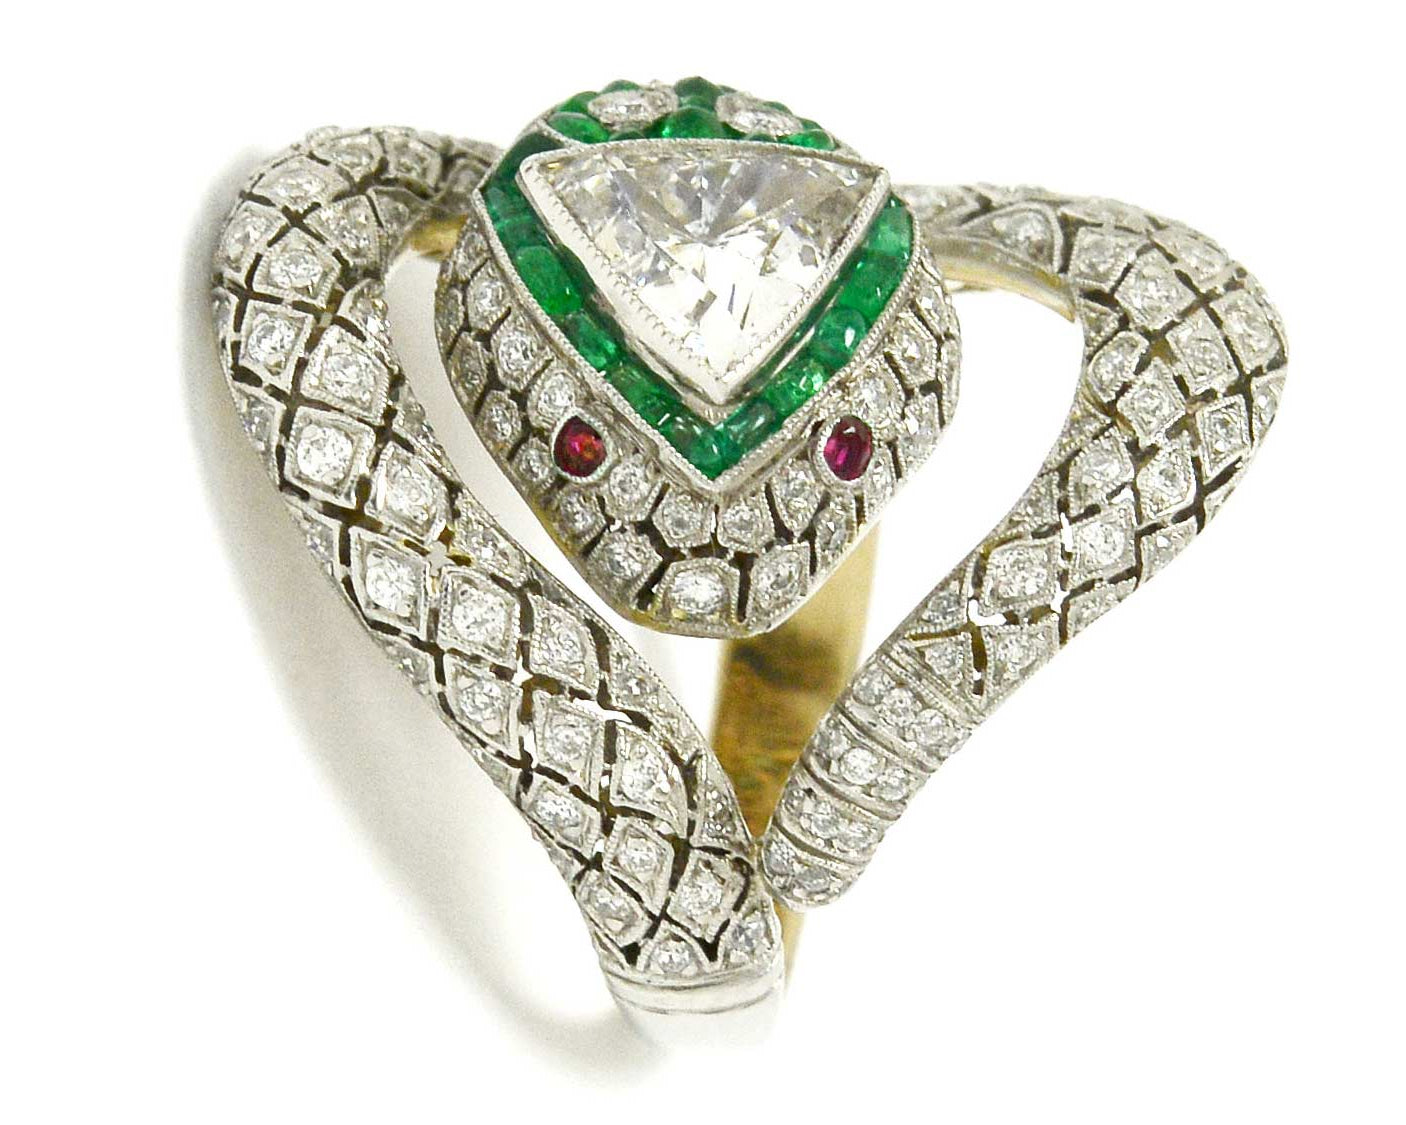 A platinum diamond snake ring with ruby eyes, emeralds surround the trillion cut diamond.